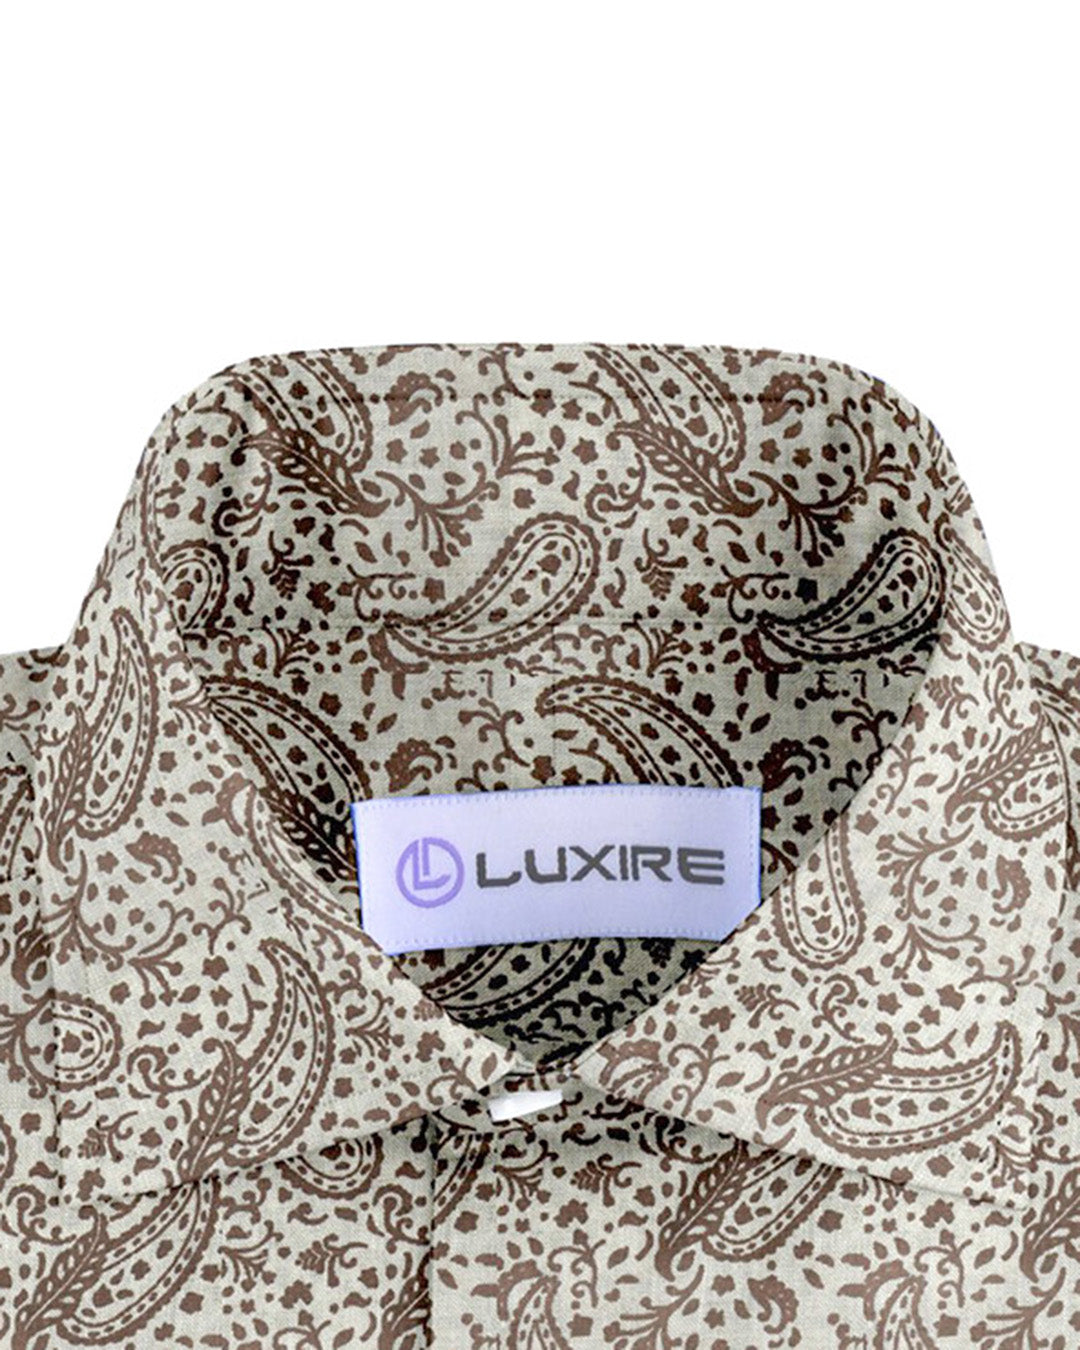 Collar of custom linen shirt for men in brown printed paisley